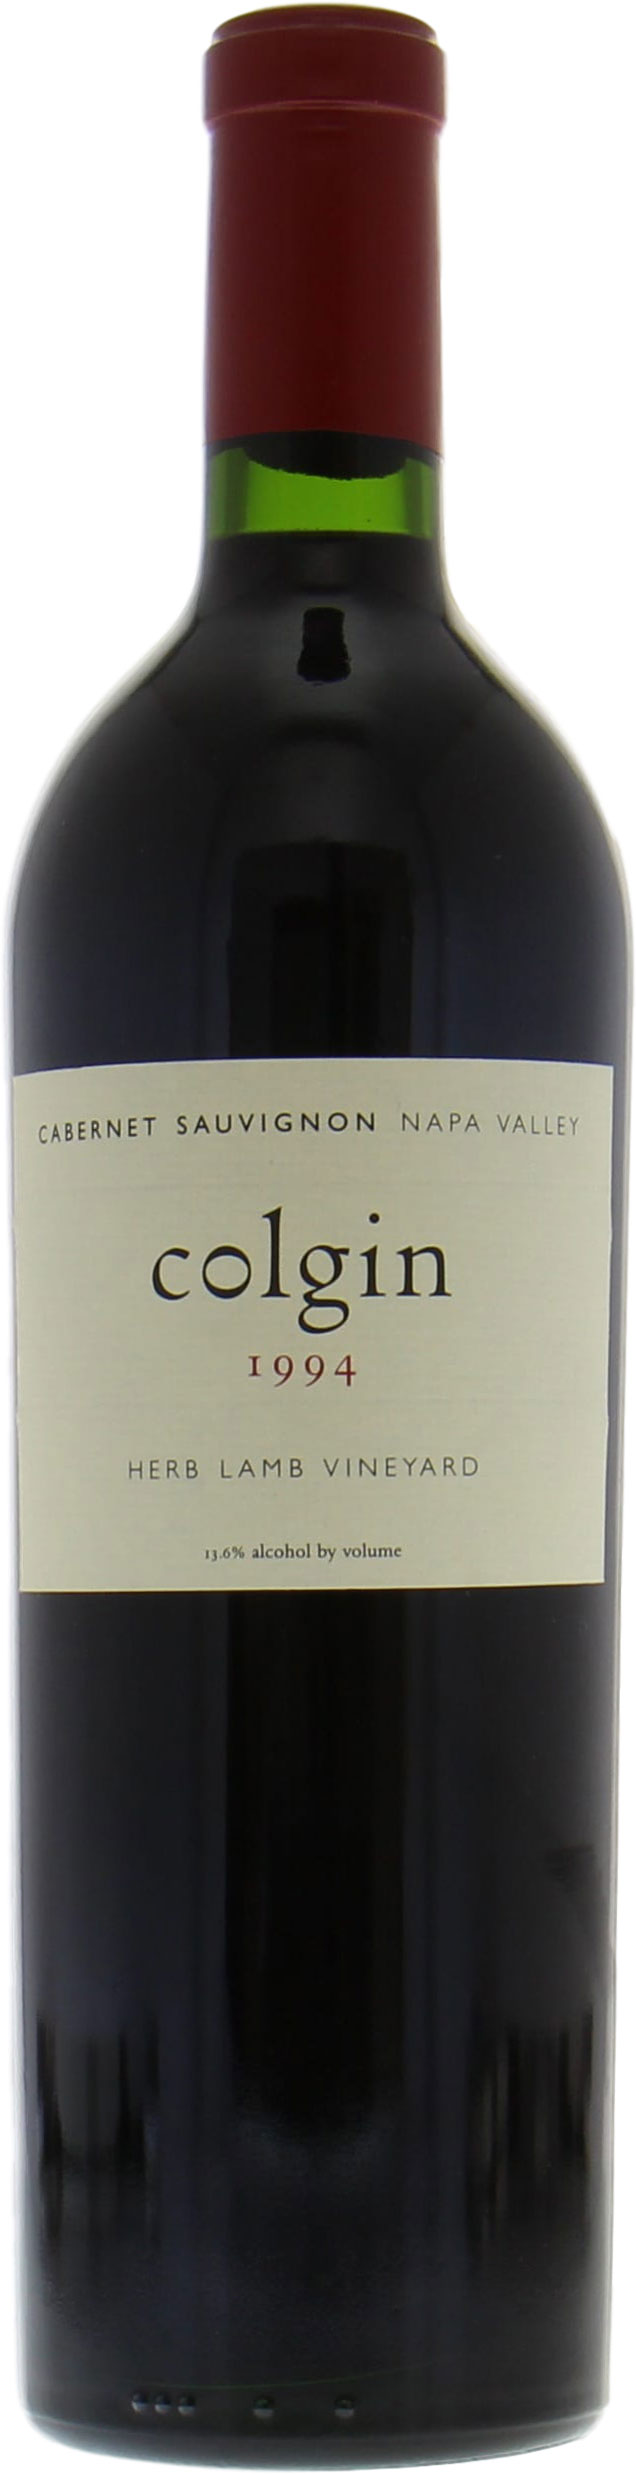 Colgin - Cabernet Sauvignon Herb Lamb Vineyard 1994 Perfect